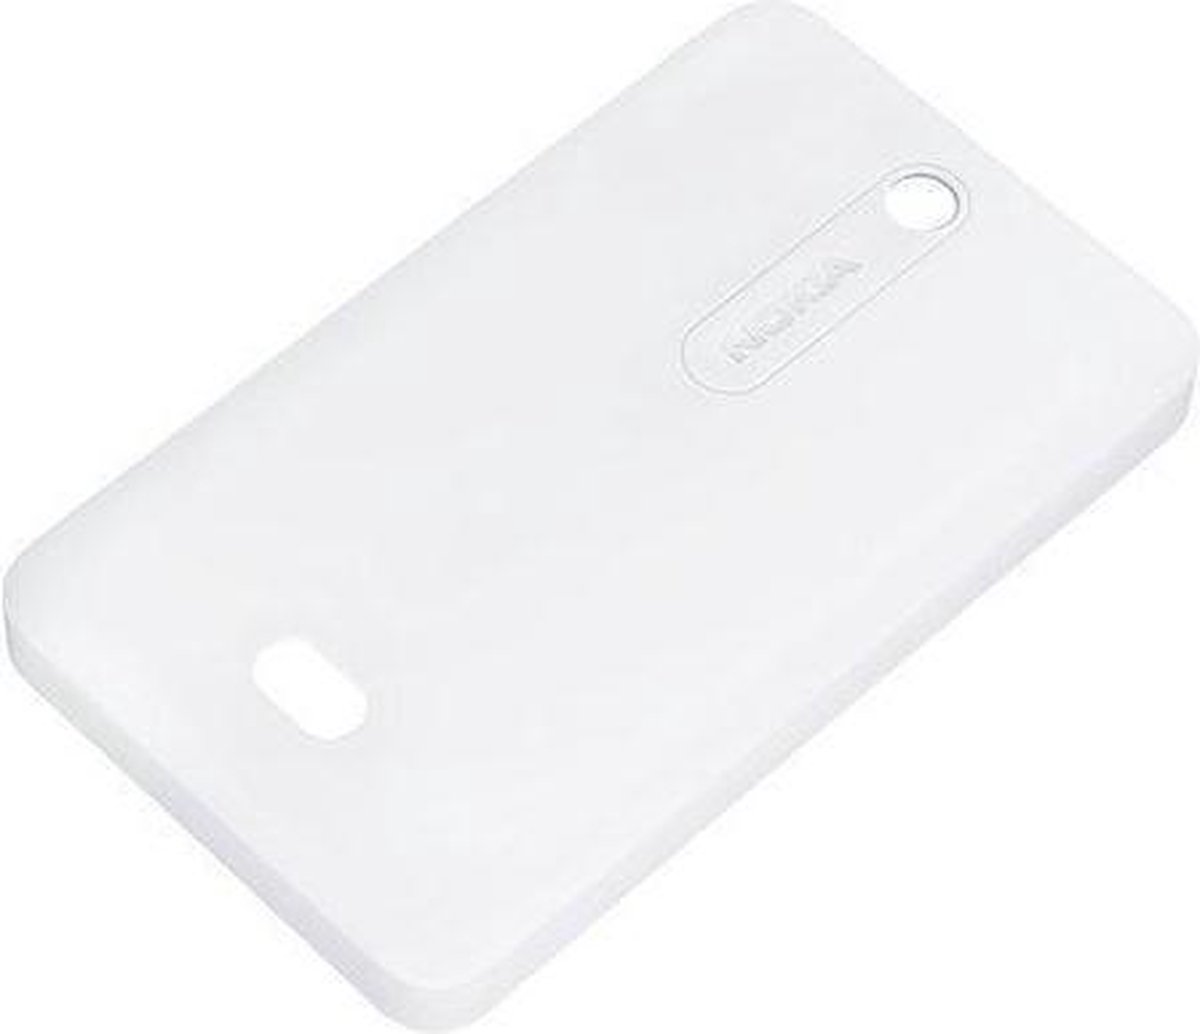 Nokia Hard Case CC-3070 Wit voor Nokia Asha 501